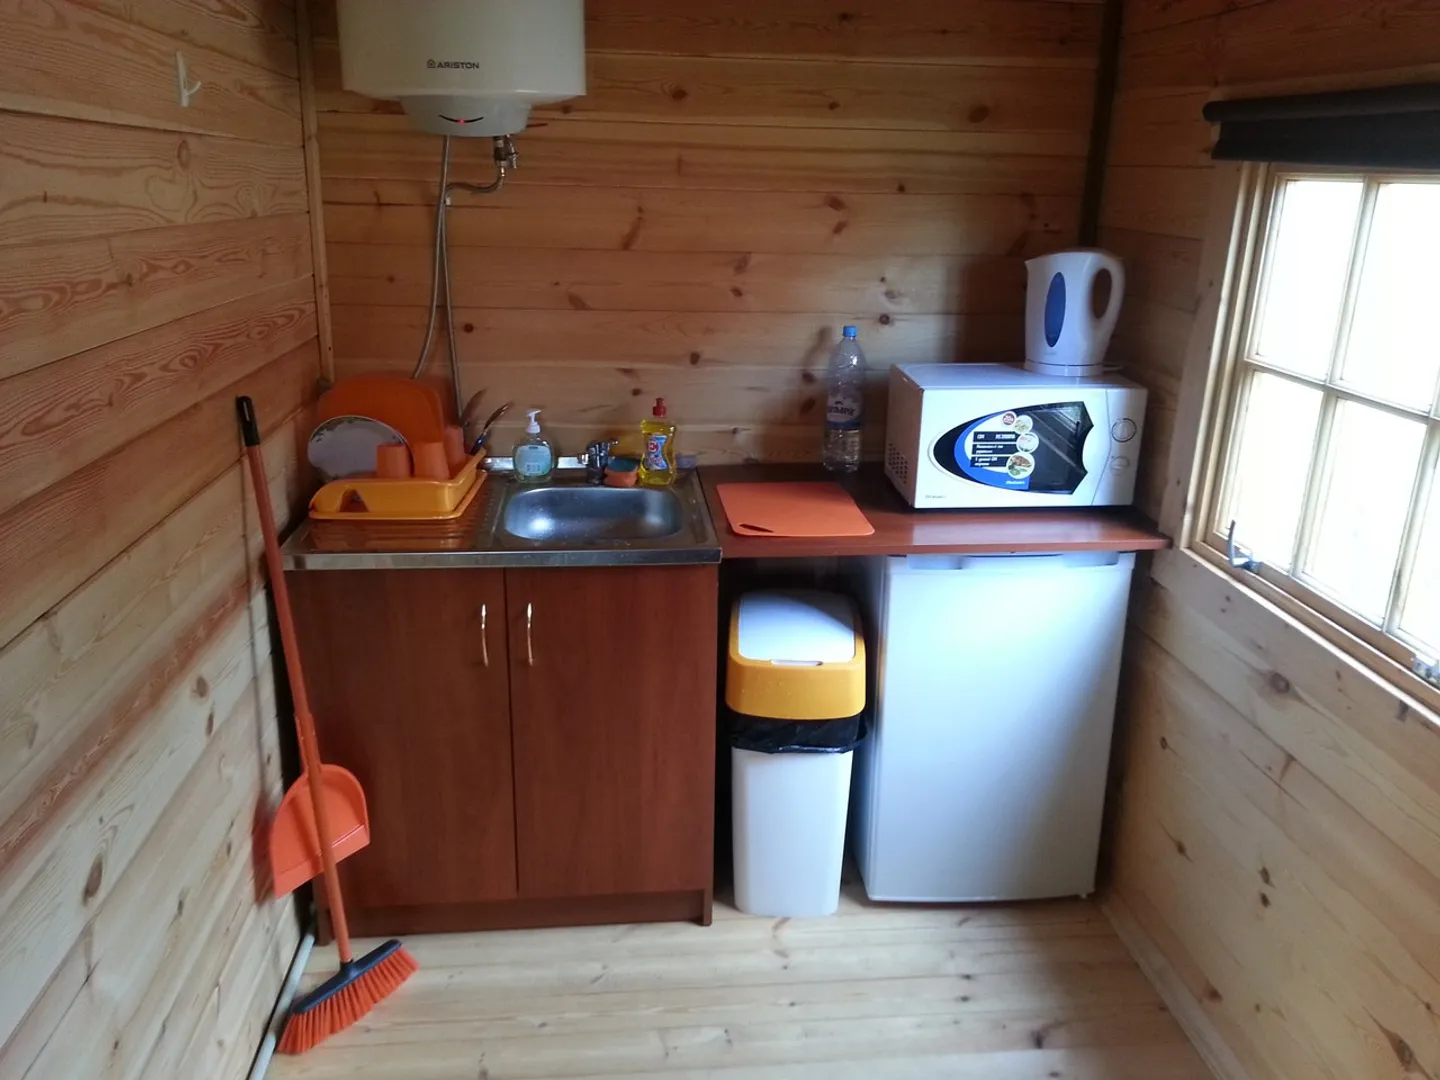 Кухонная зона: Бойлер, эл.плитка, эл.чайник, холодильник, микроволновка